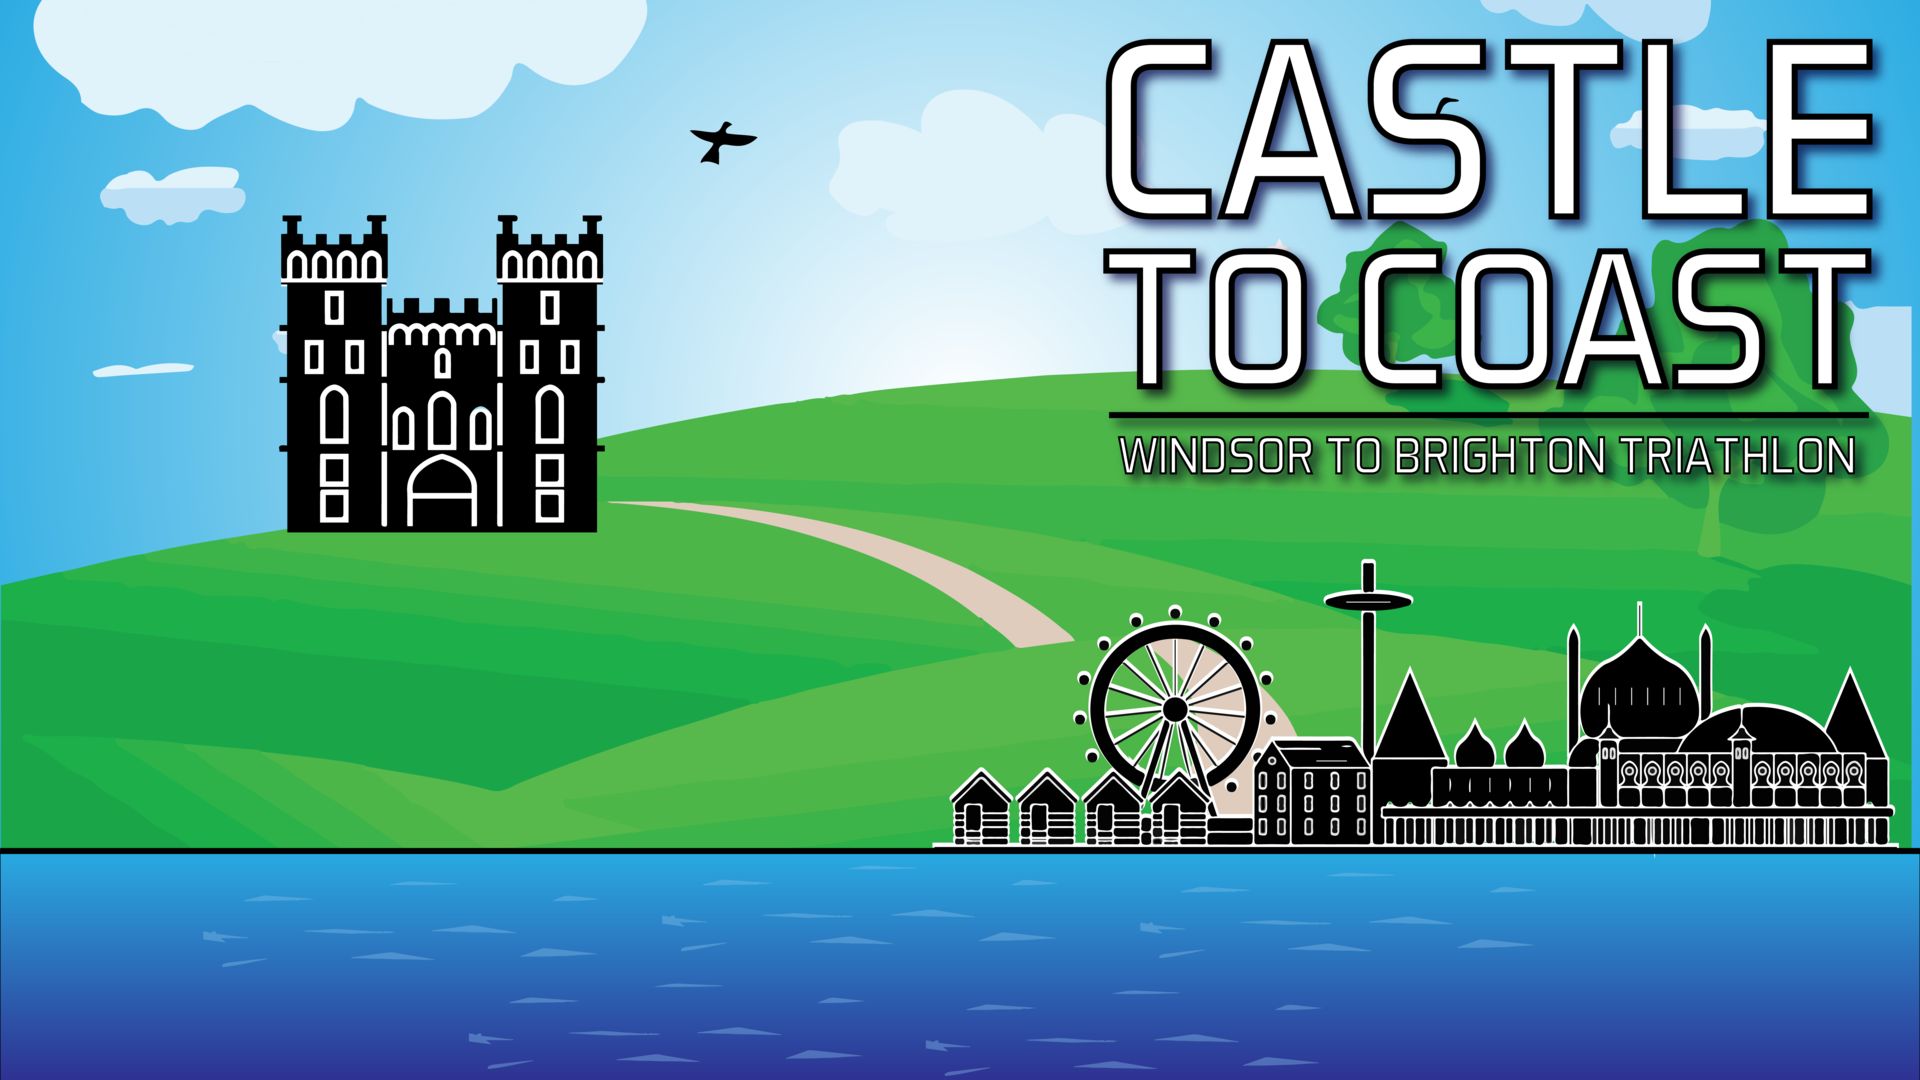 Castle to Coast Triathlon 2021, Windsor, Windsor and Maidenhead, United Kingdom